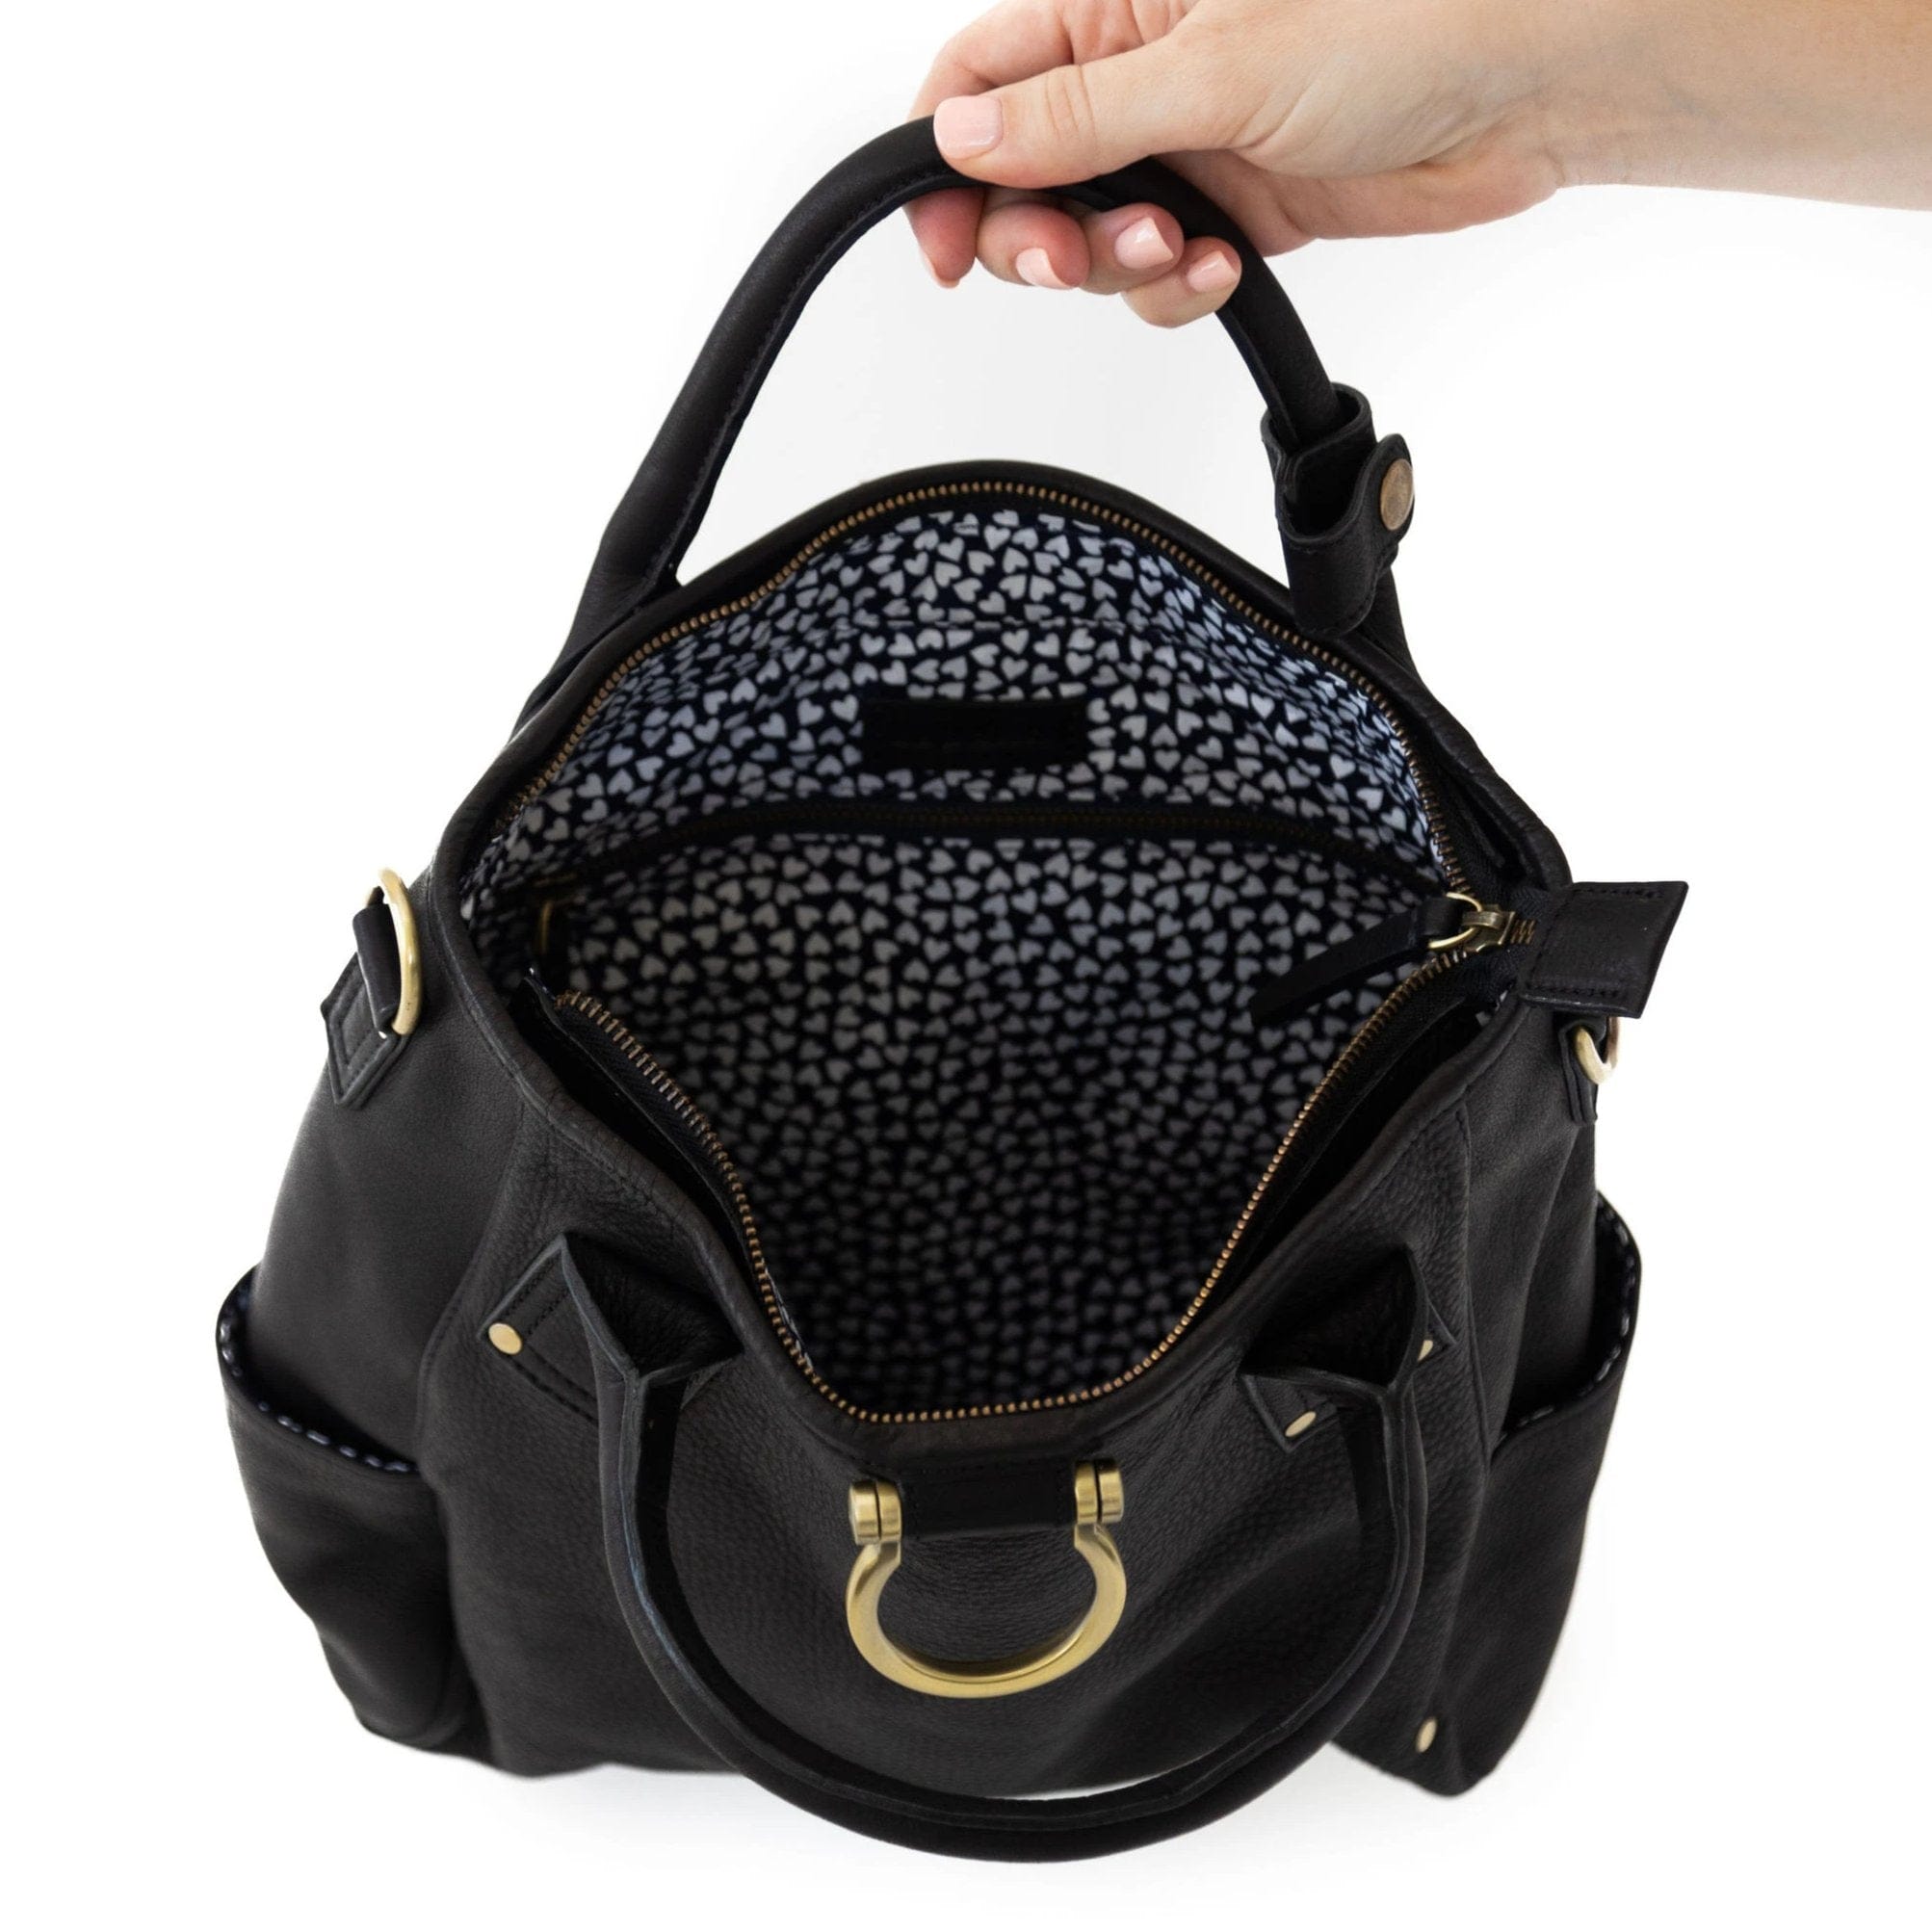 Chloe Leather Convertible Backpack and Crossbody Bag – Sapahn